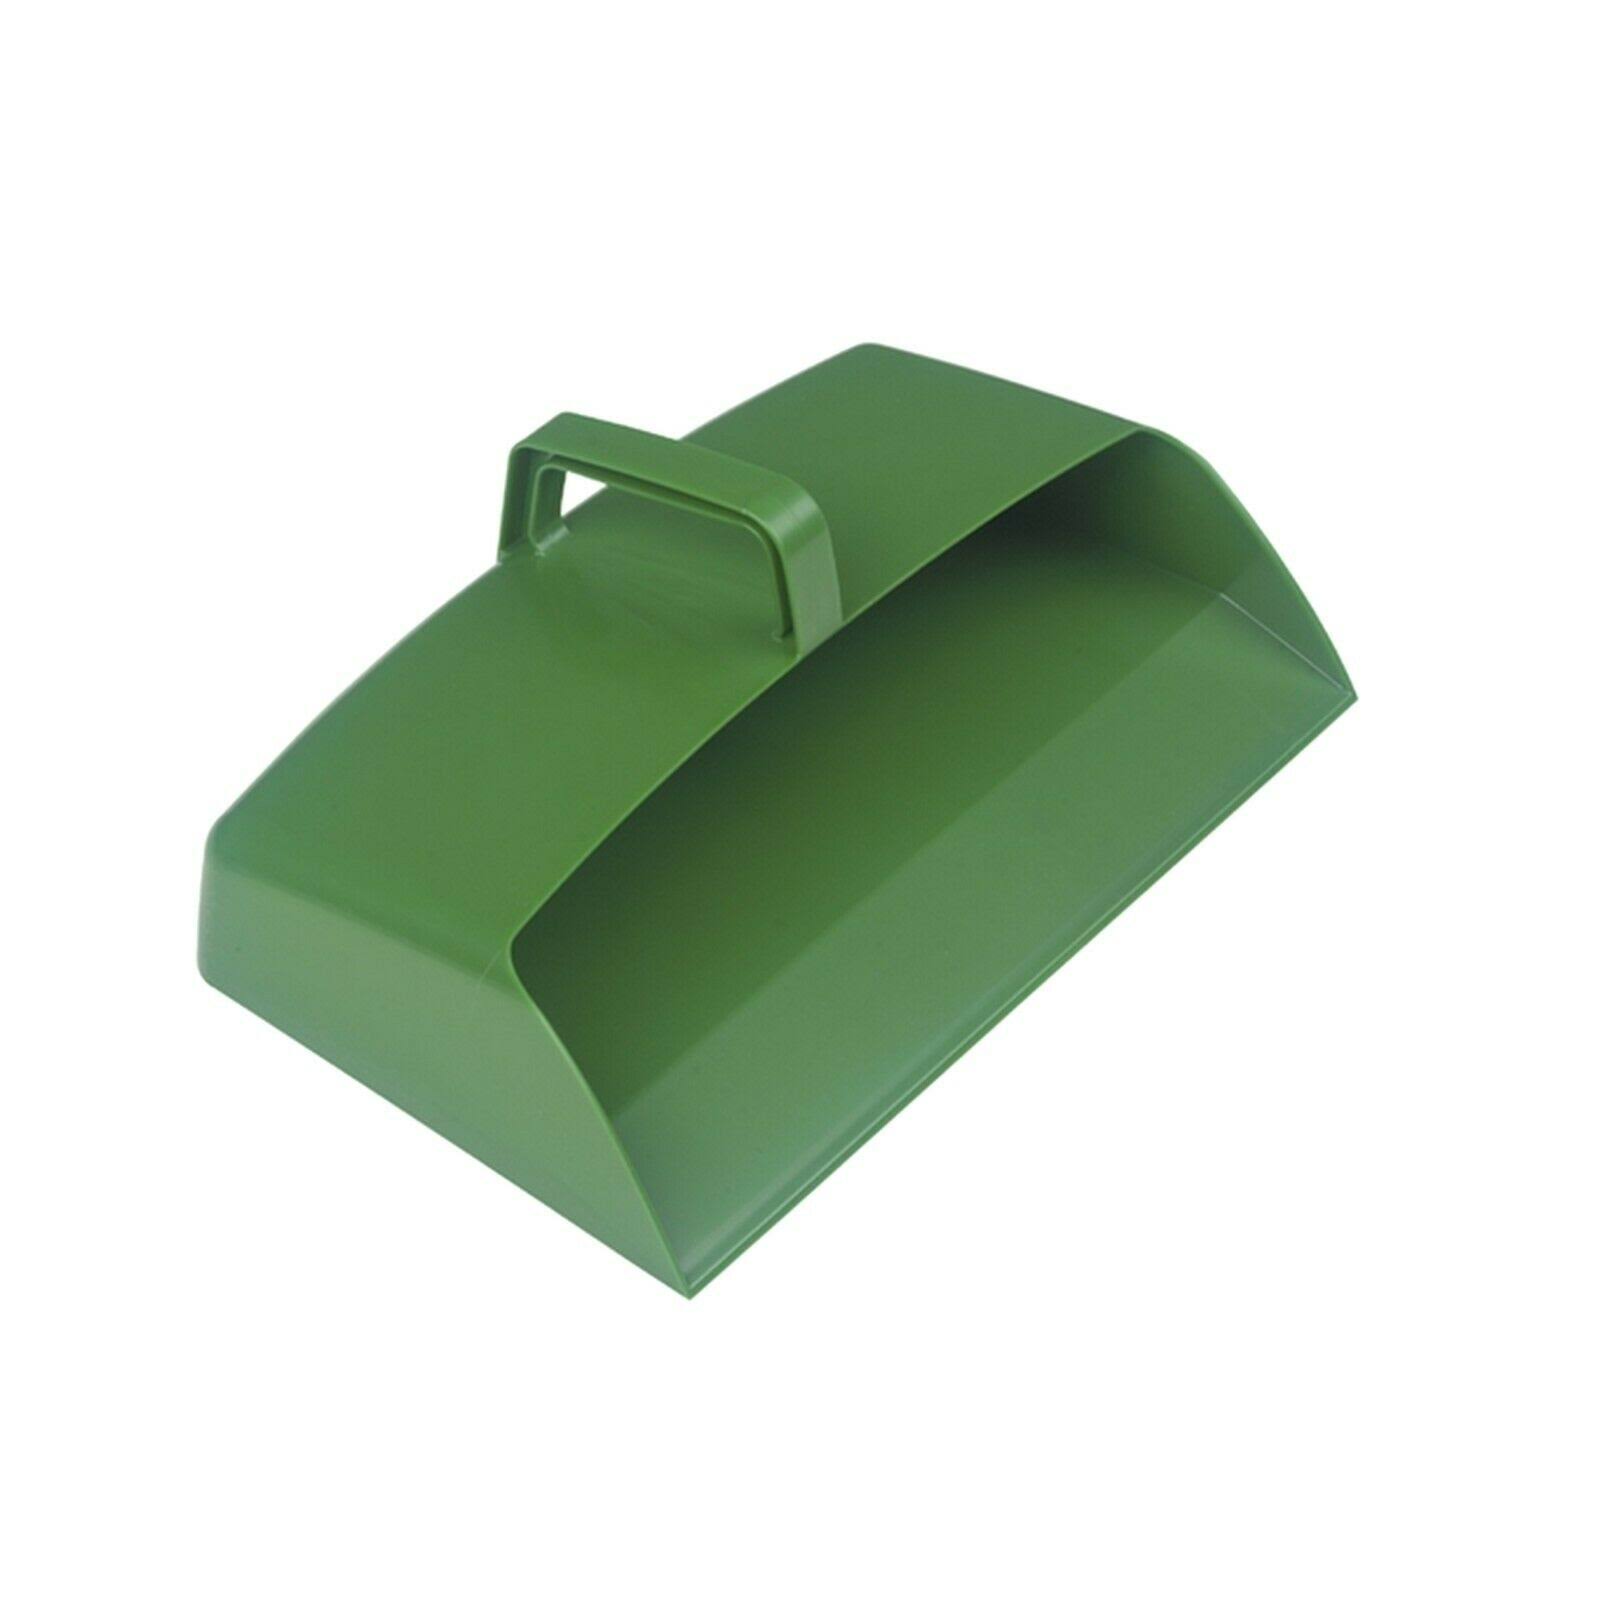 Hills Brush DP3G Enclosed Plastic Dustpan Green 305mm